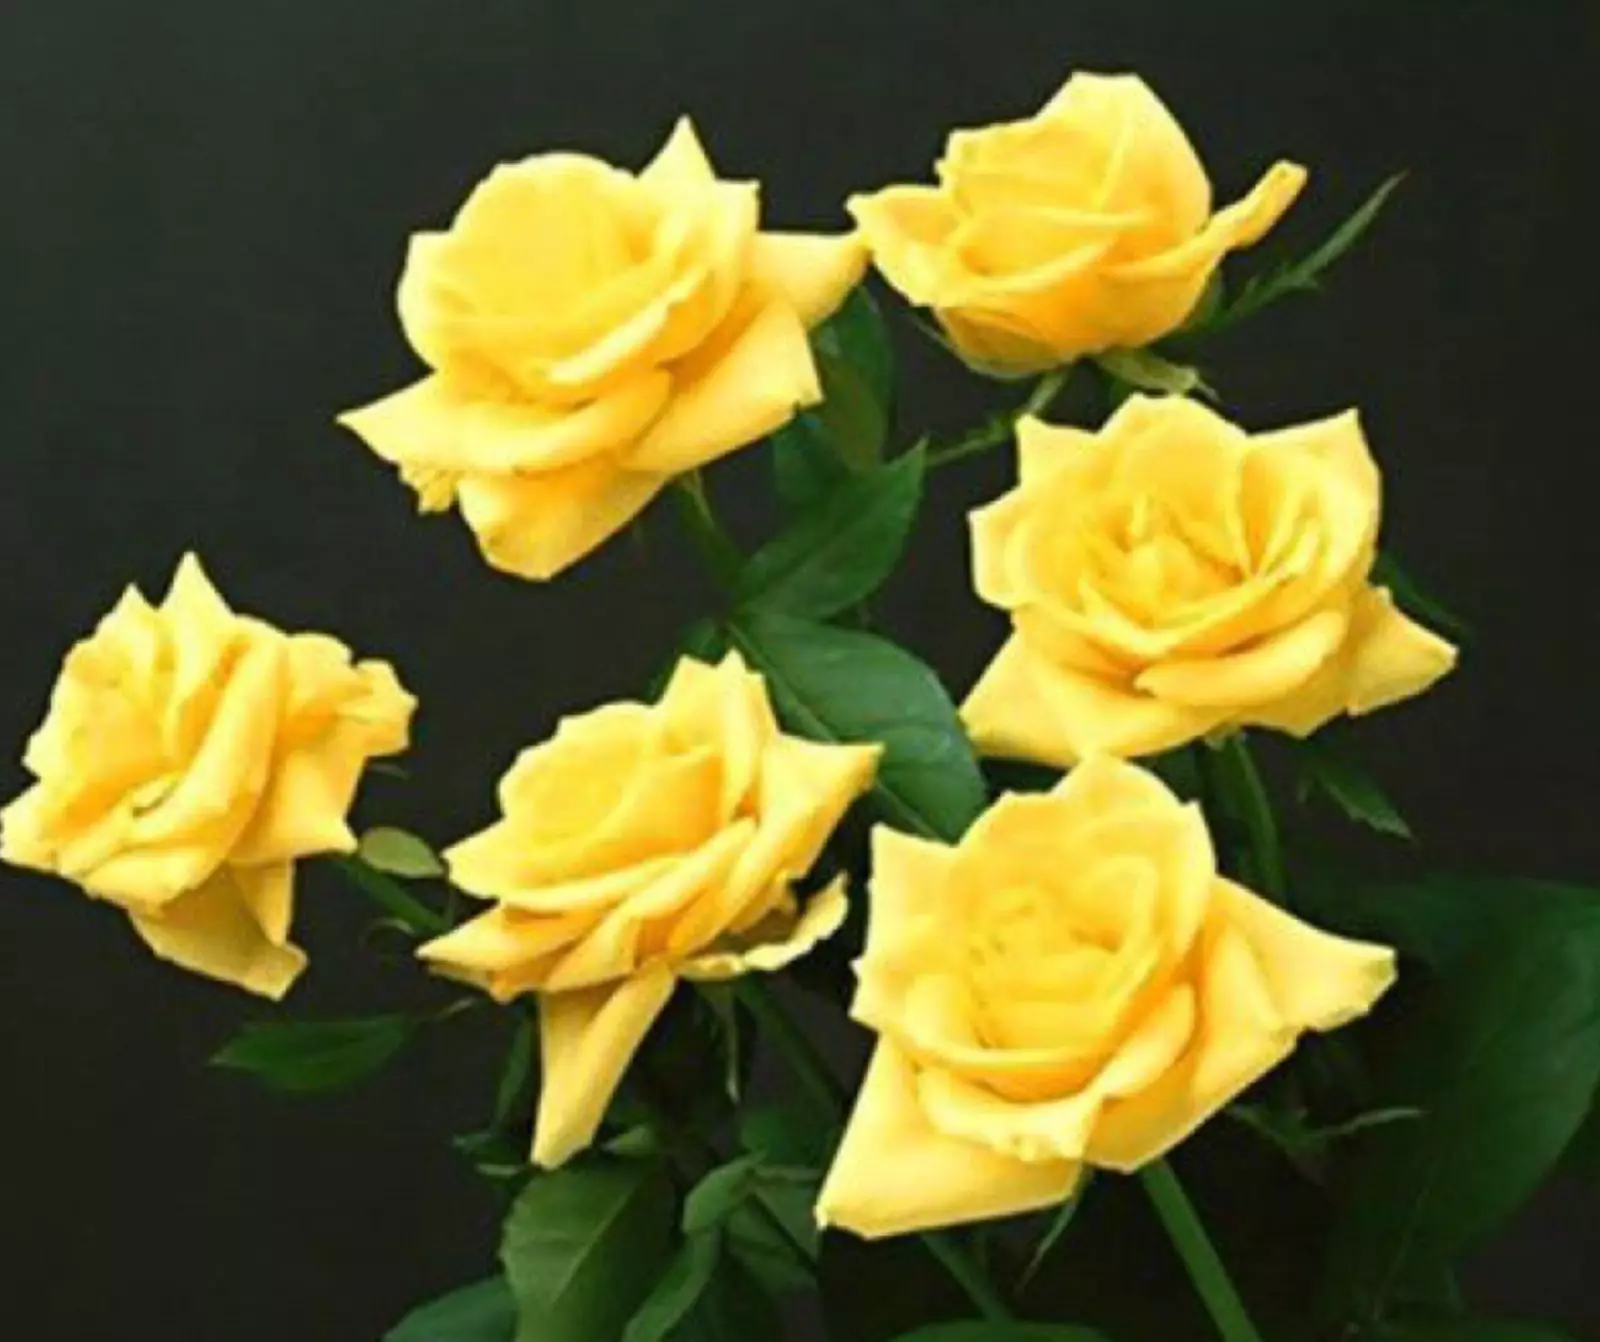 20 SEEDS for CLASSIC SUN YELLOW Rose hybrid flower - $13.63